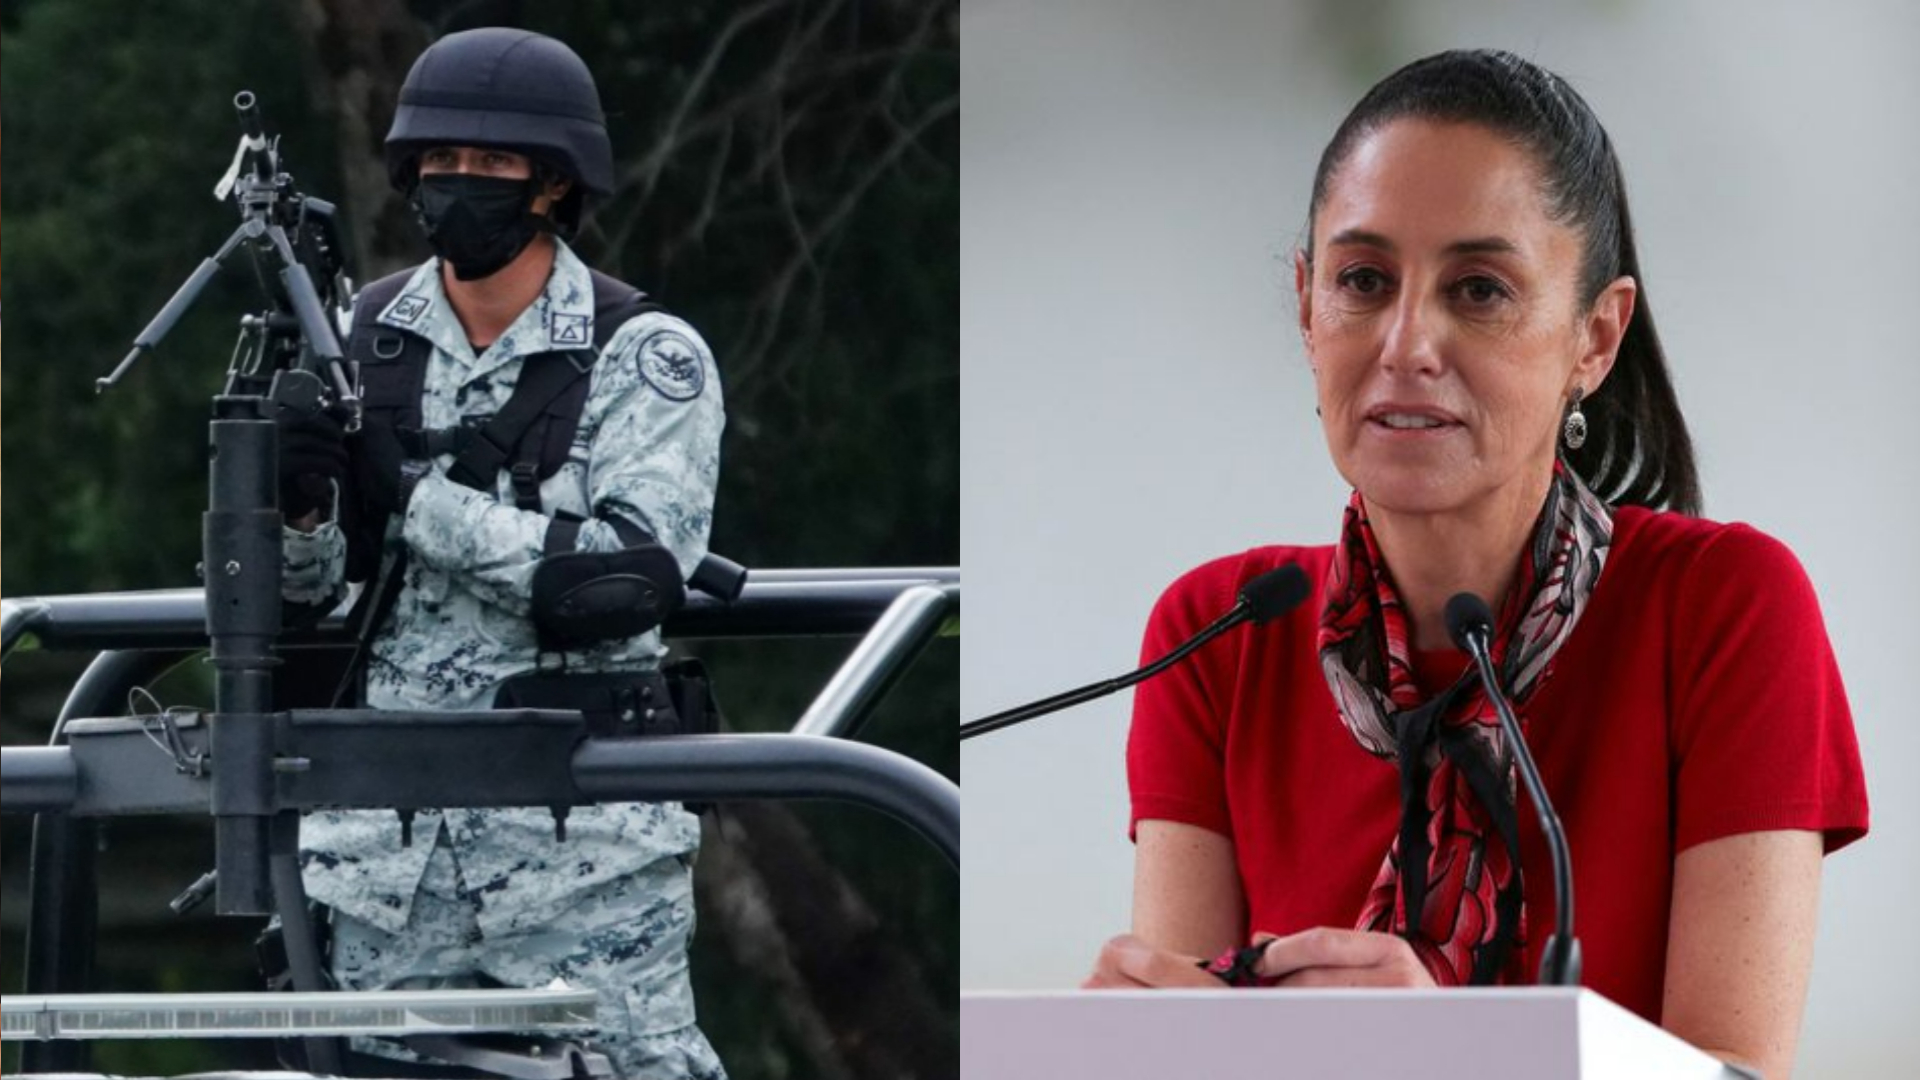 “Ganó la sensatez”: Claudia Sheinbaum celebró la aprobación de reforma a la Guardia Nacional